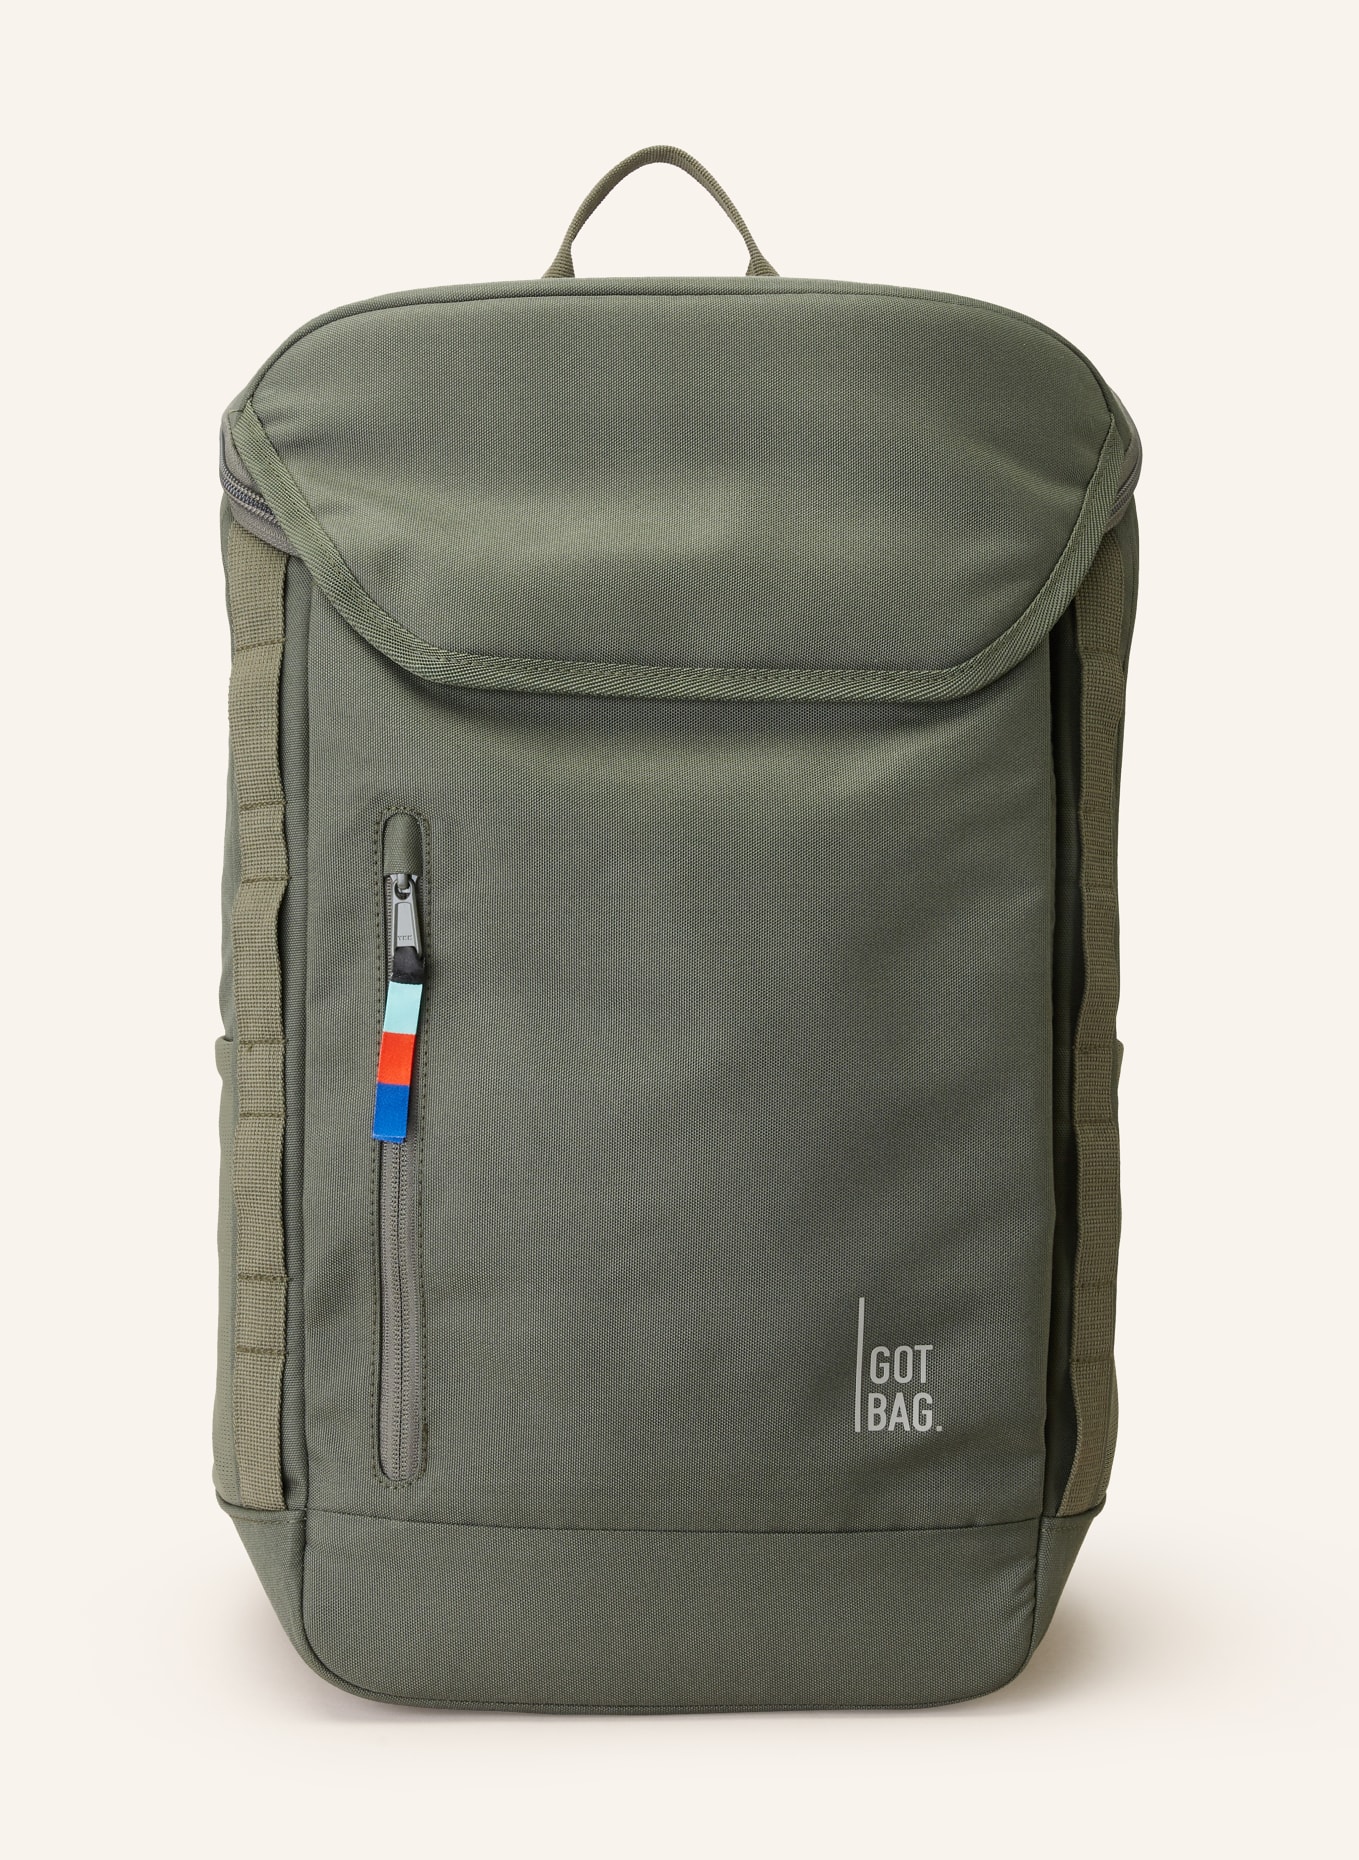 GOT BAG Rucksack PRO PACK mit Laptop-Fach, Farbe: KHAKI (Bild 1)